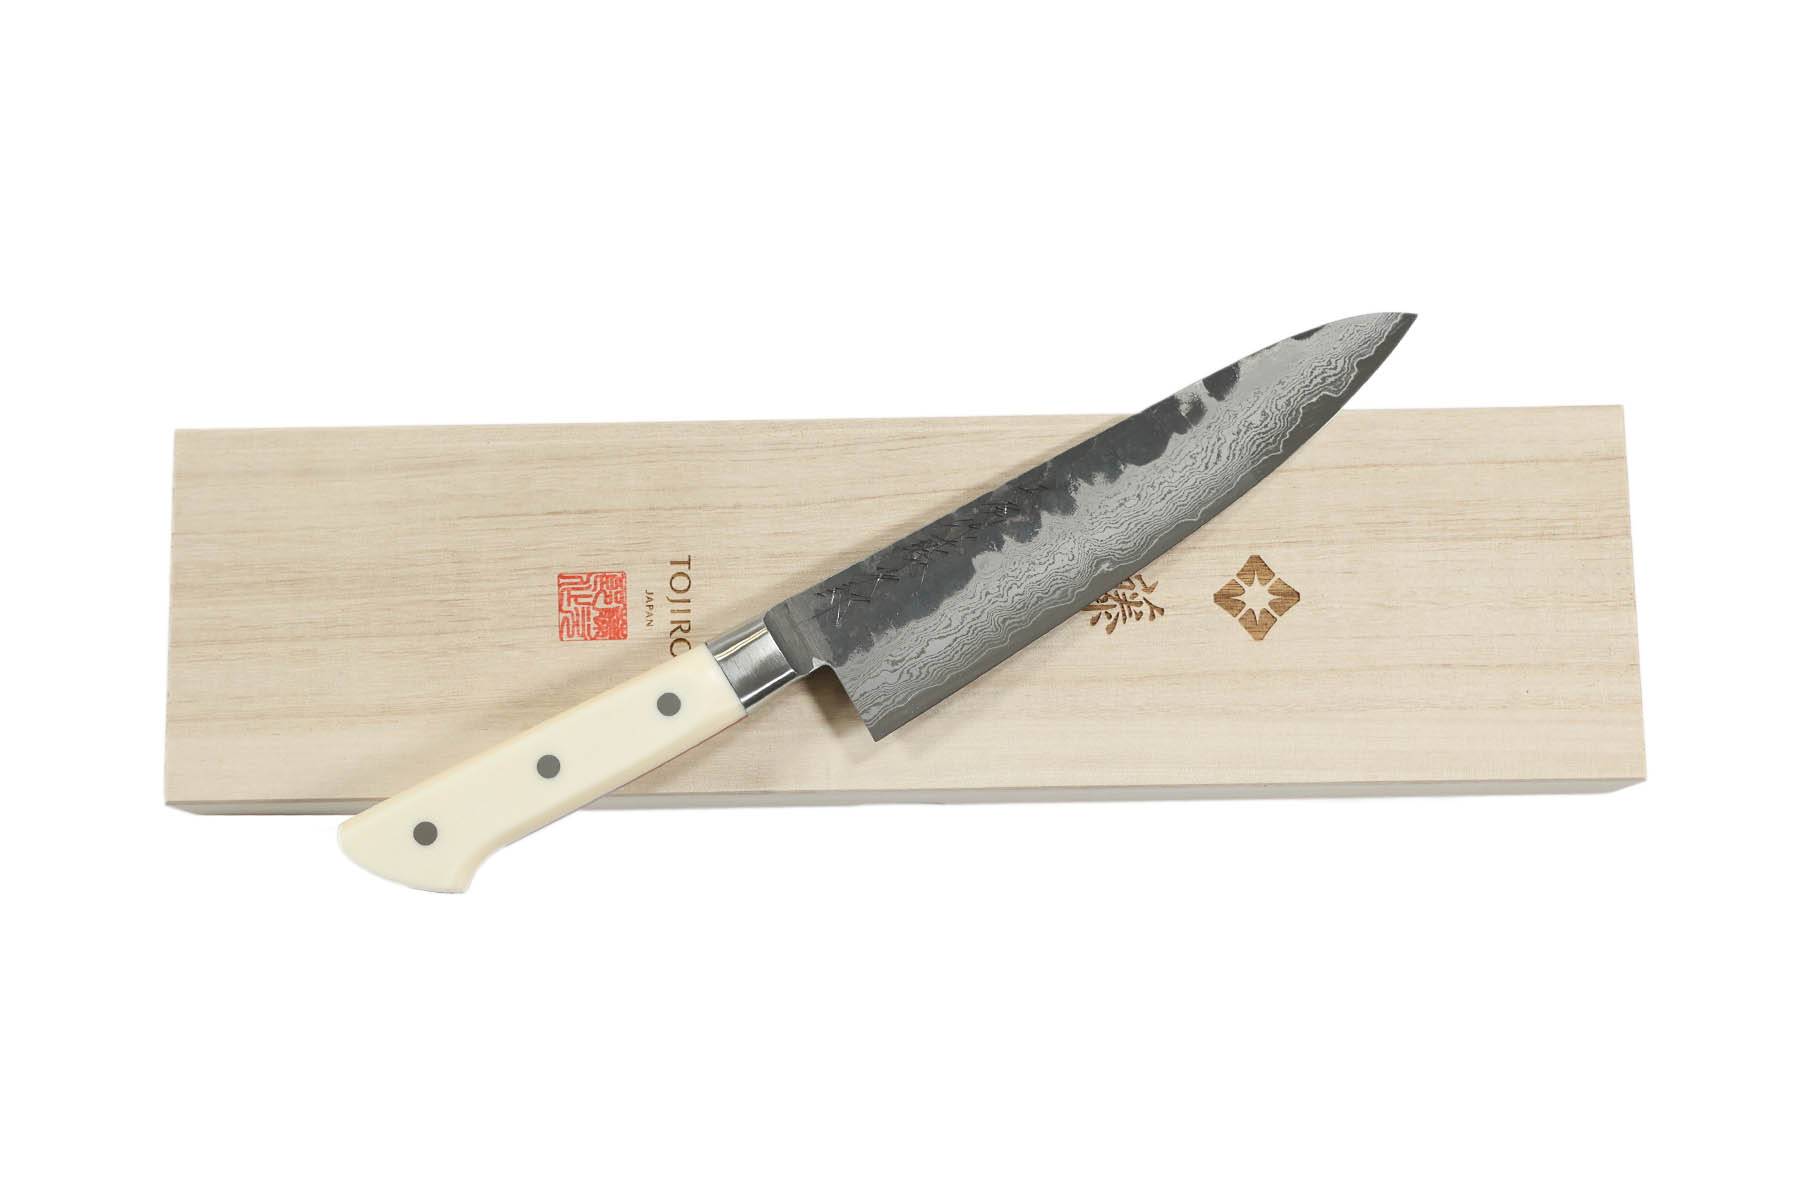 Couteau japonais artisanal Tojiro Handmade VG10 - Couteau gyuto 18 cm